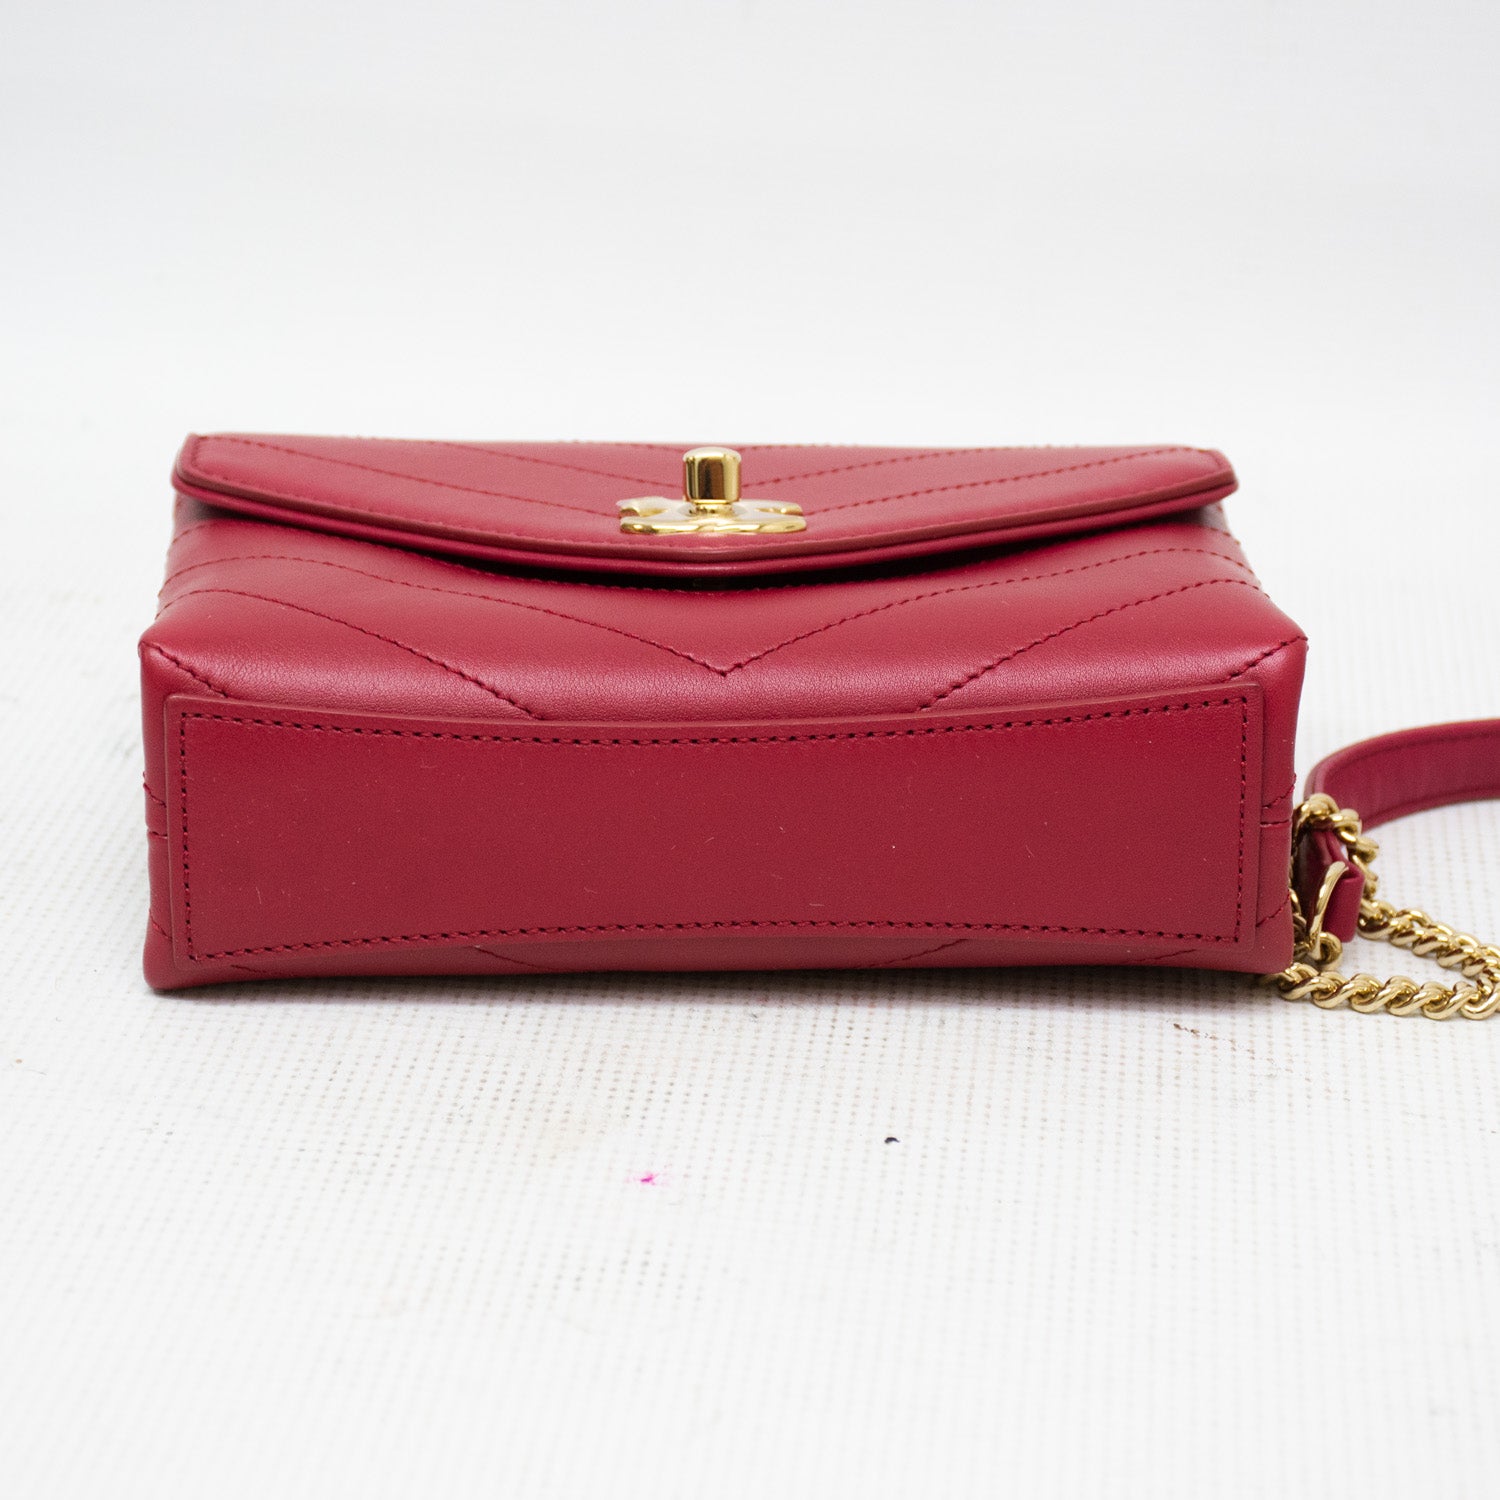 Chanel Calfskin Leather Small Chevron Handbag